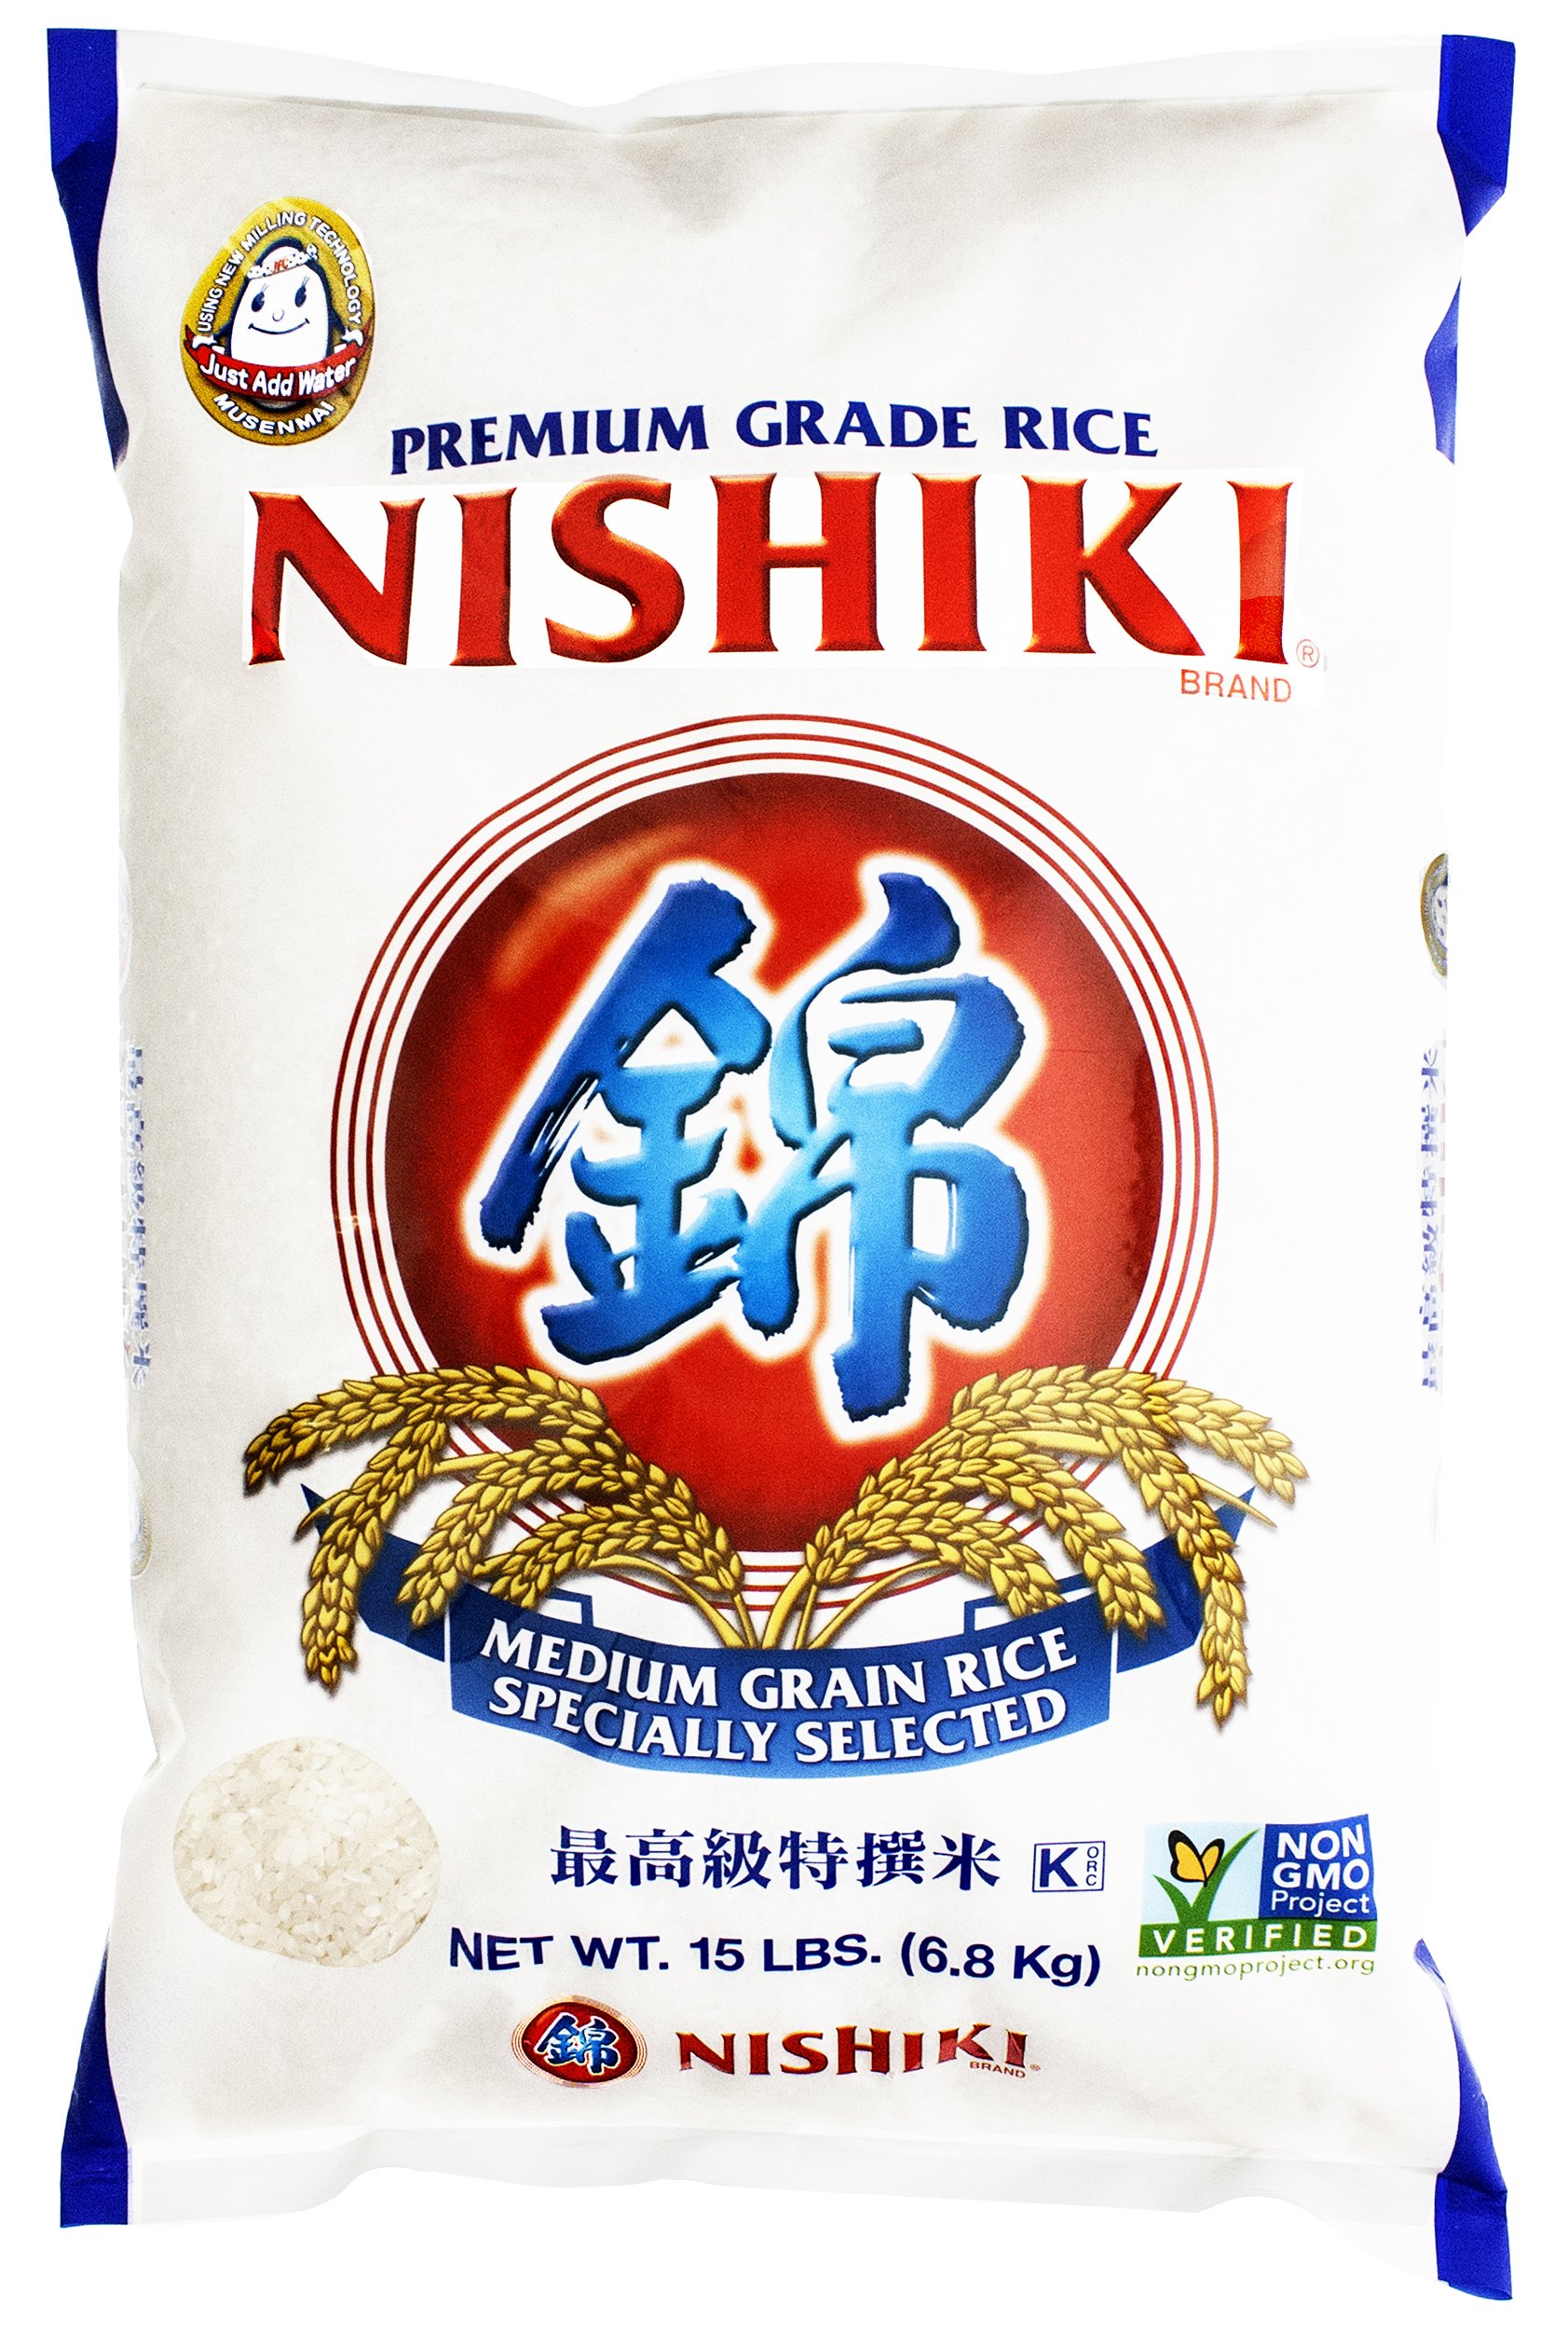 Nishiki Premium Rice, Medium Grain 15lbs Amazon s&s $15